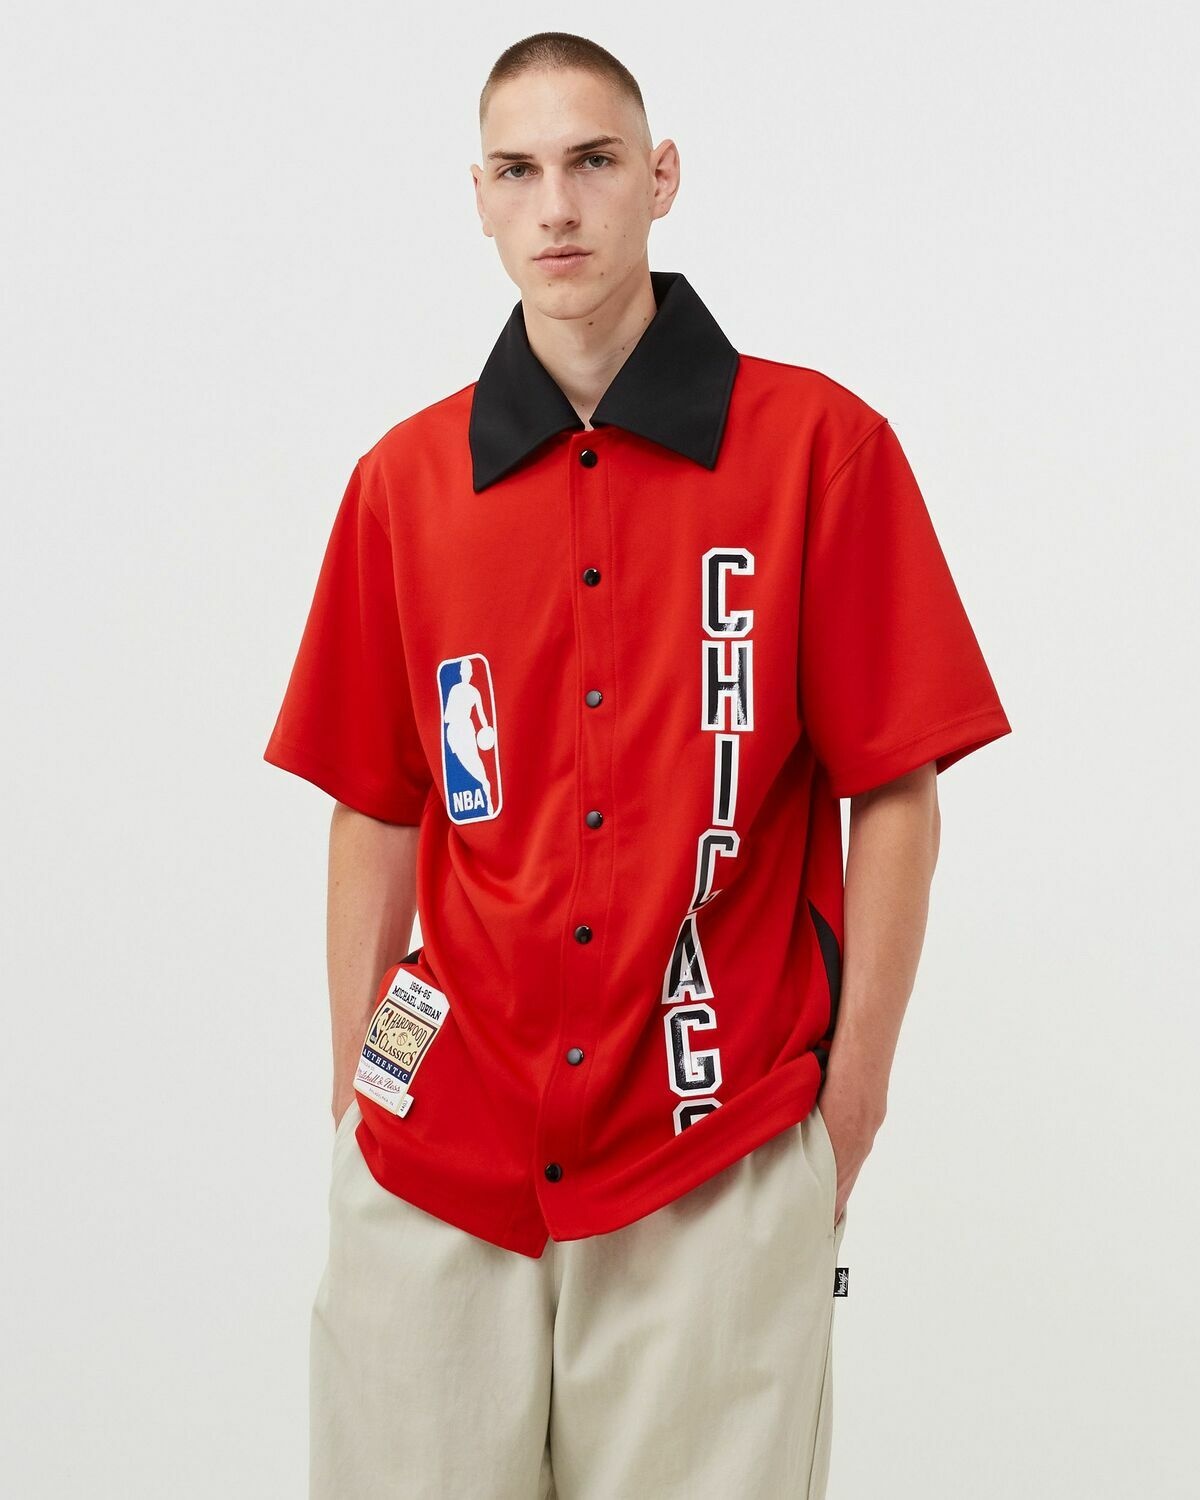 Mitchell & Ness Authentic Shooting Shirt Chicago Bulls Basketball